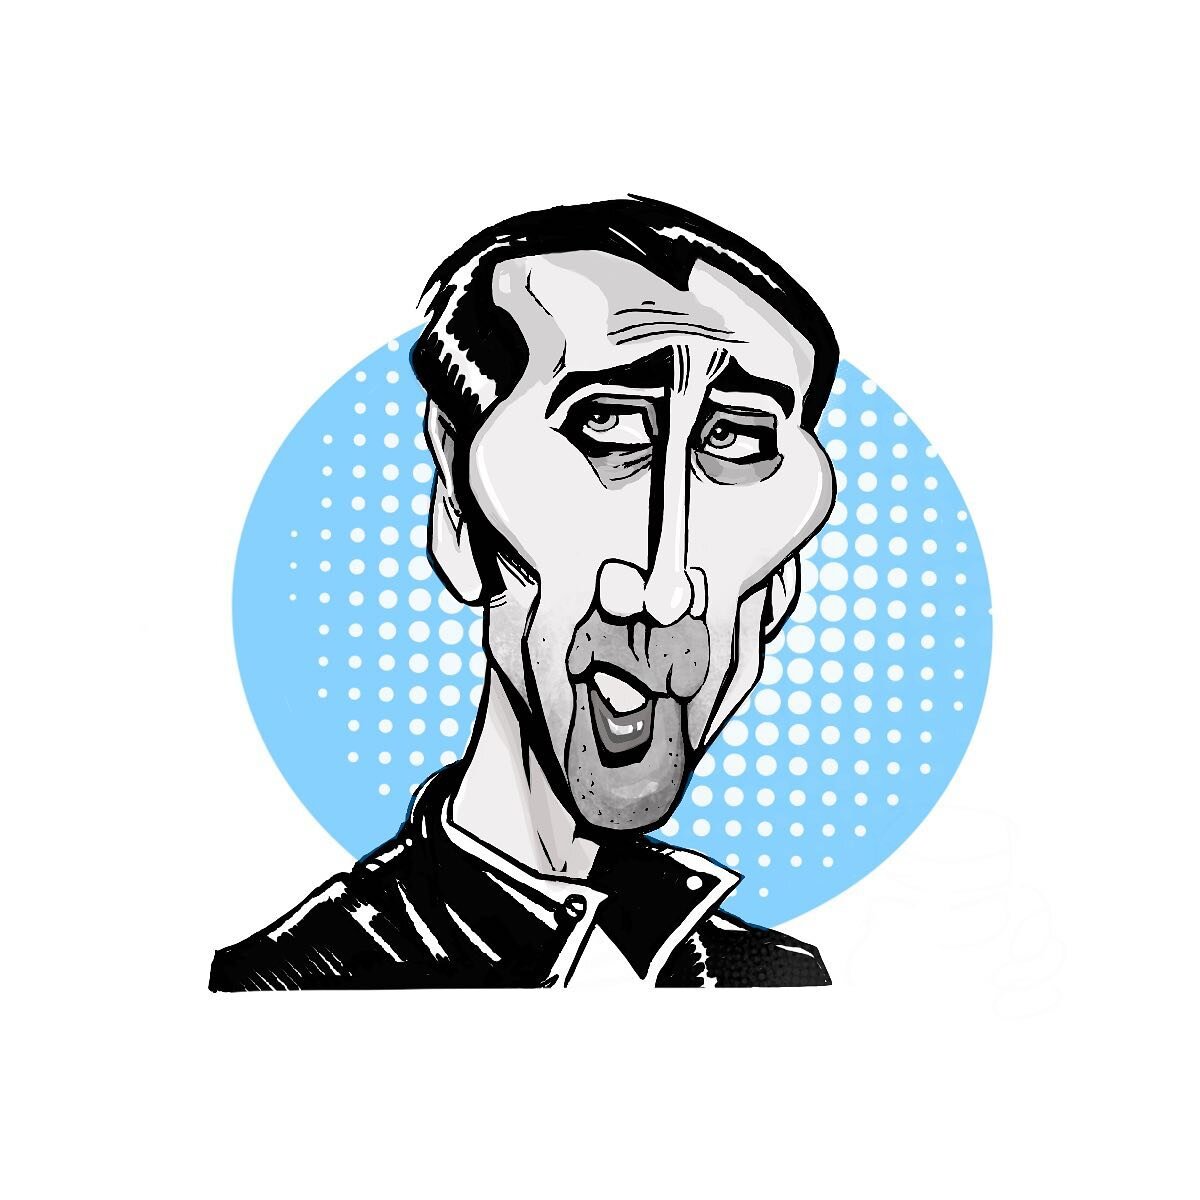 Nicholas Cage caricature...

@nicholascage_official #caricatureart #funnydrawings #nicholascage #sketch #cartoondrawing #partyideas #happyfridayeveryone #celebritydrawing #digitalillustration  #happyfridayeveryone